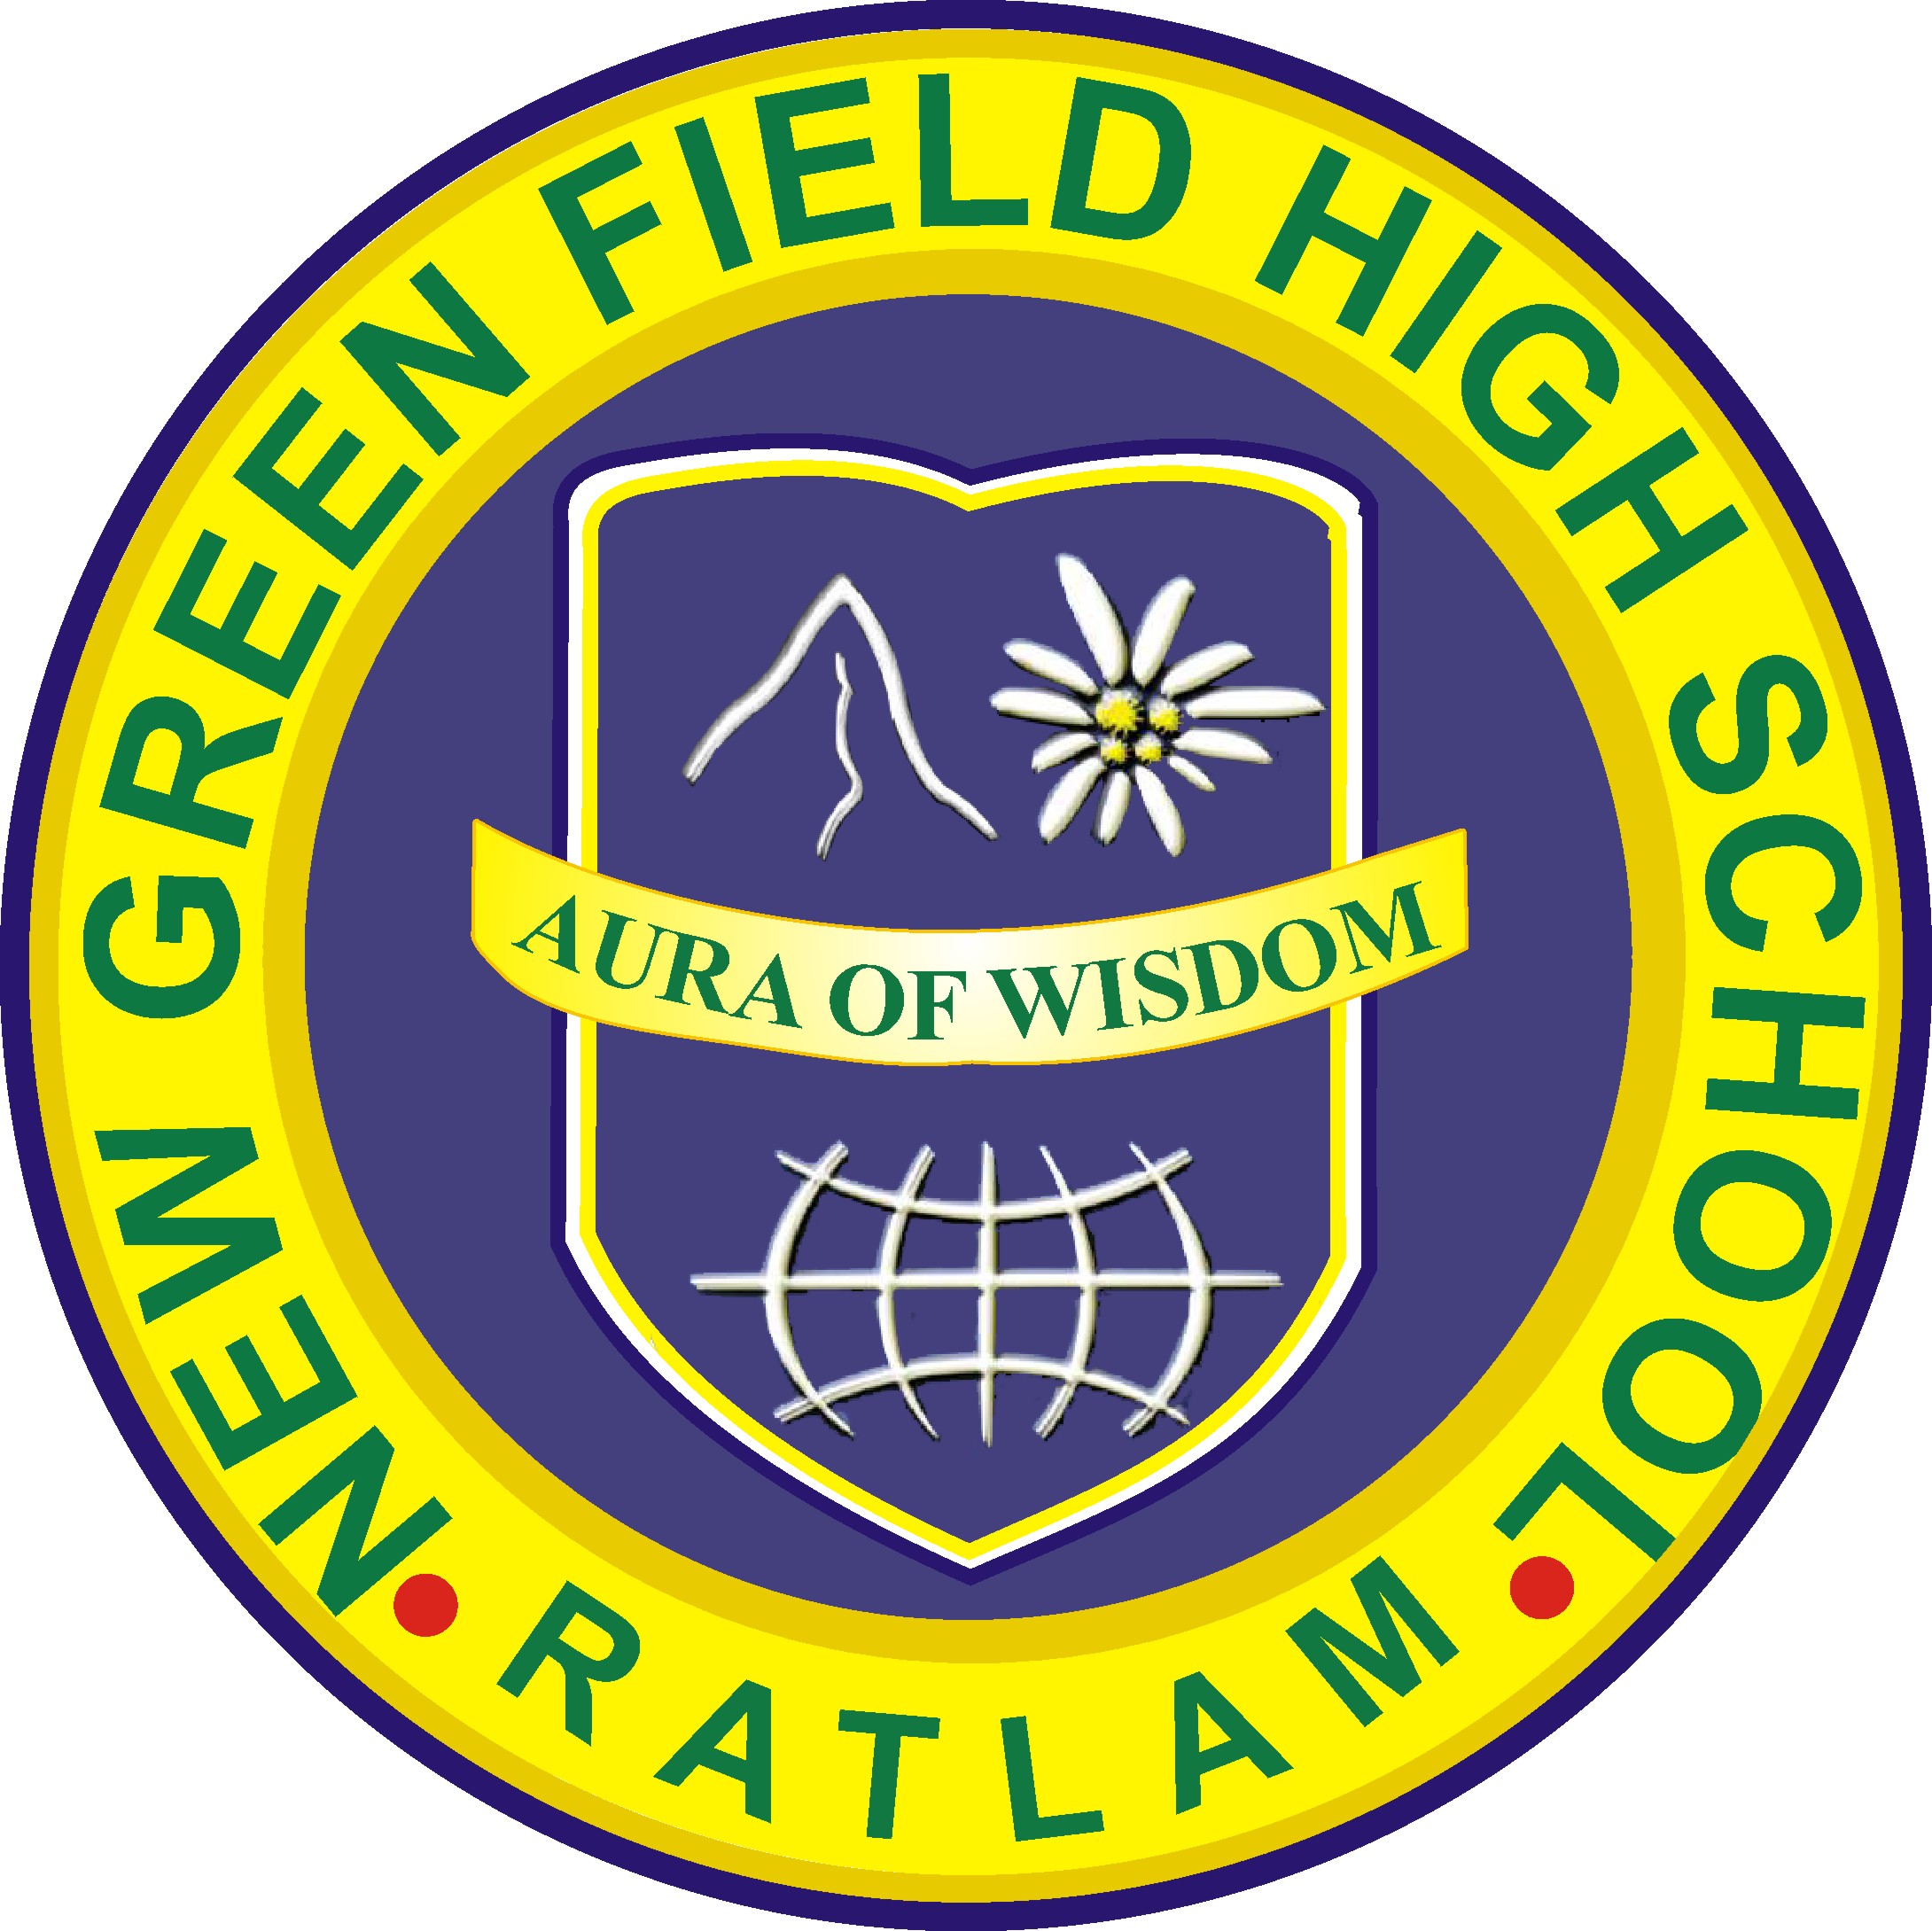 New Green Field High School|Coaching Institute|Education